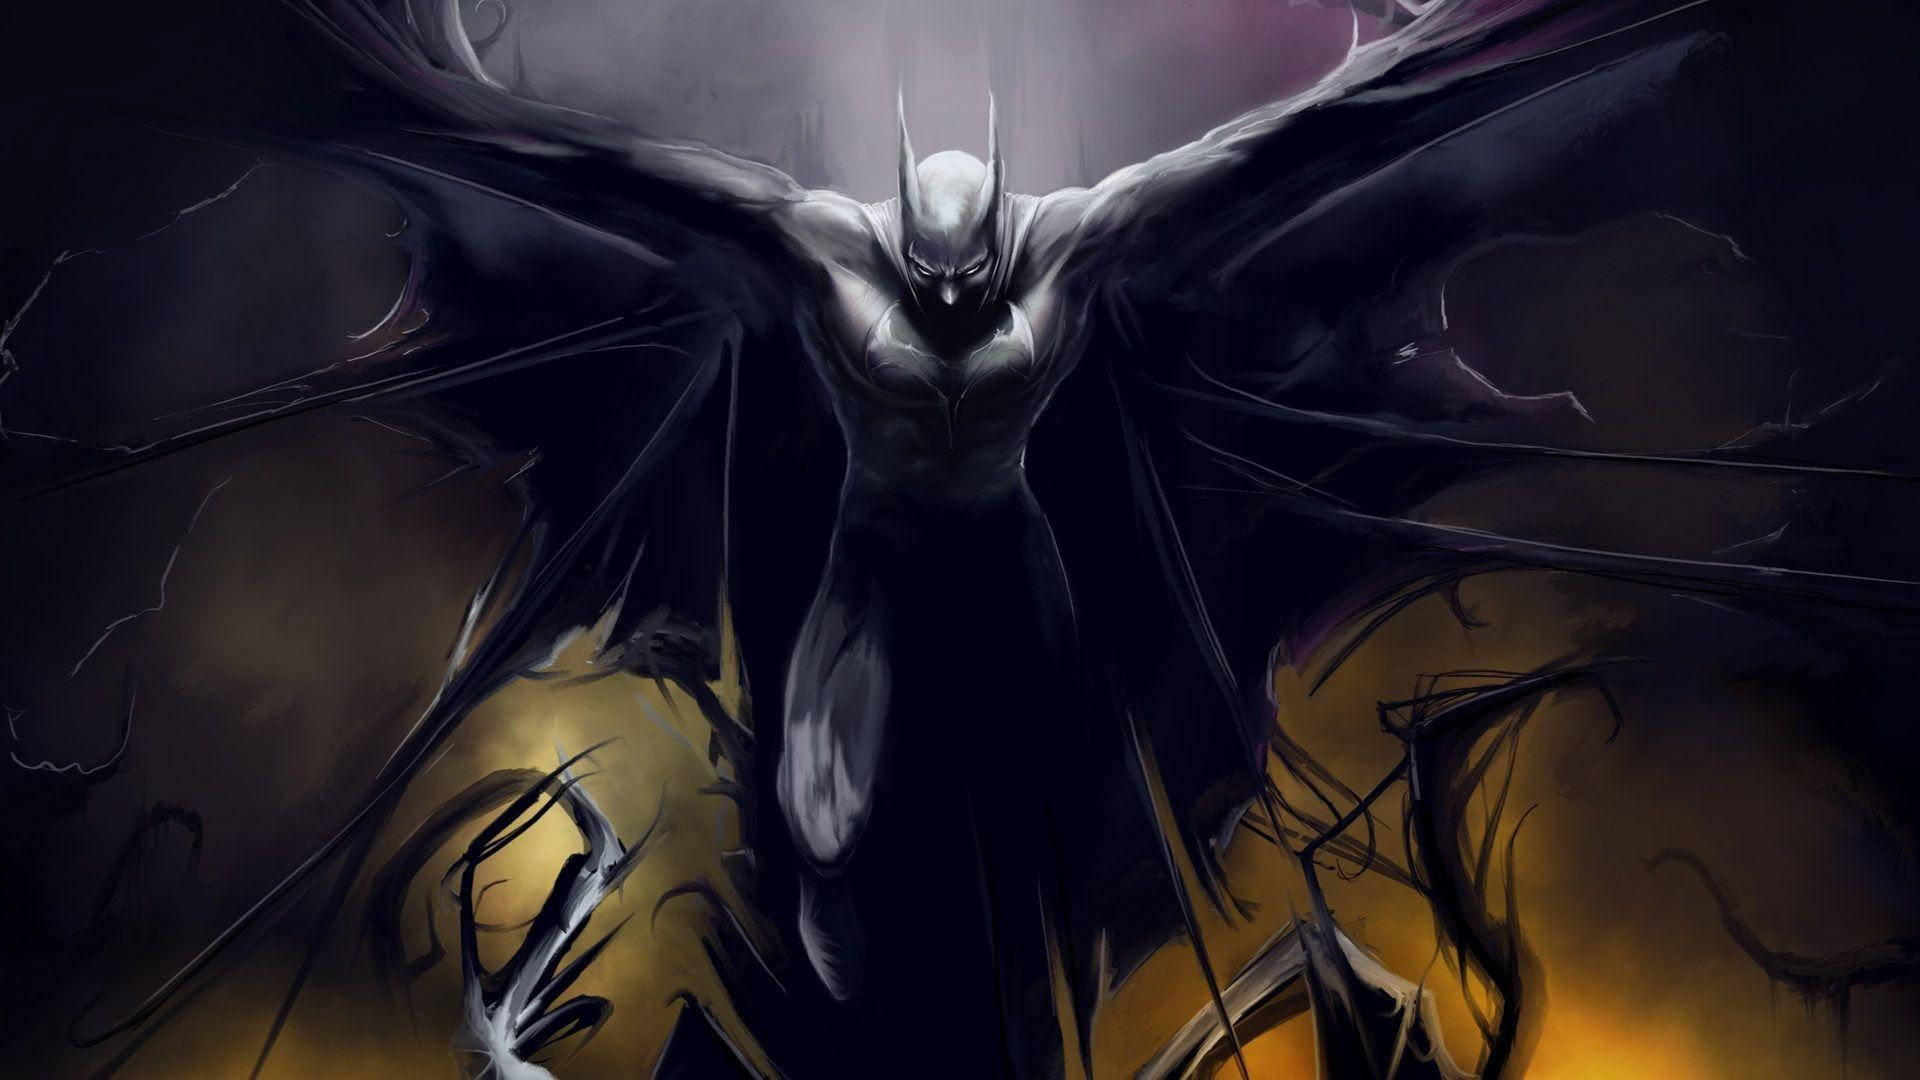 Sick Batman Wings Wallpaper